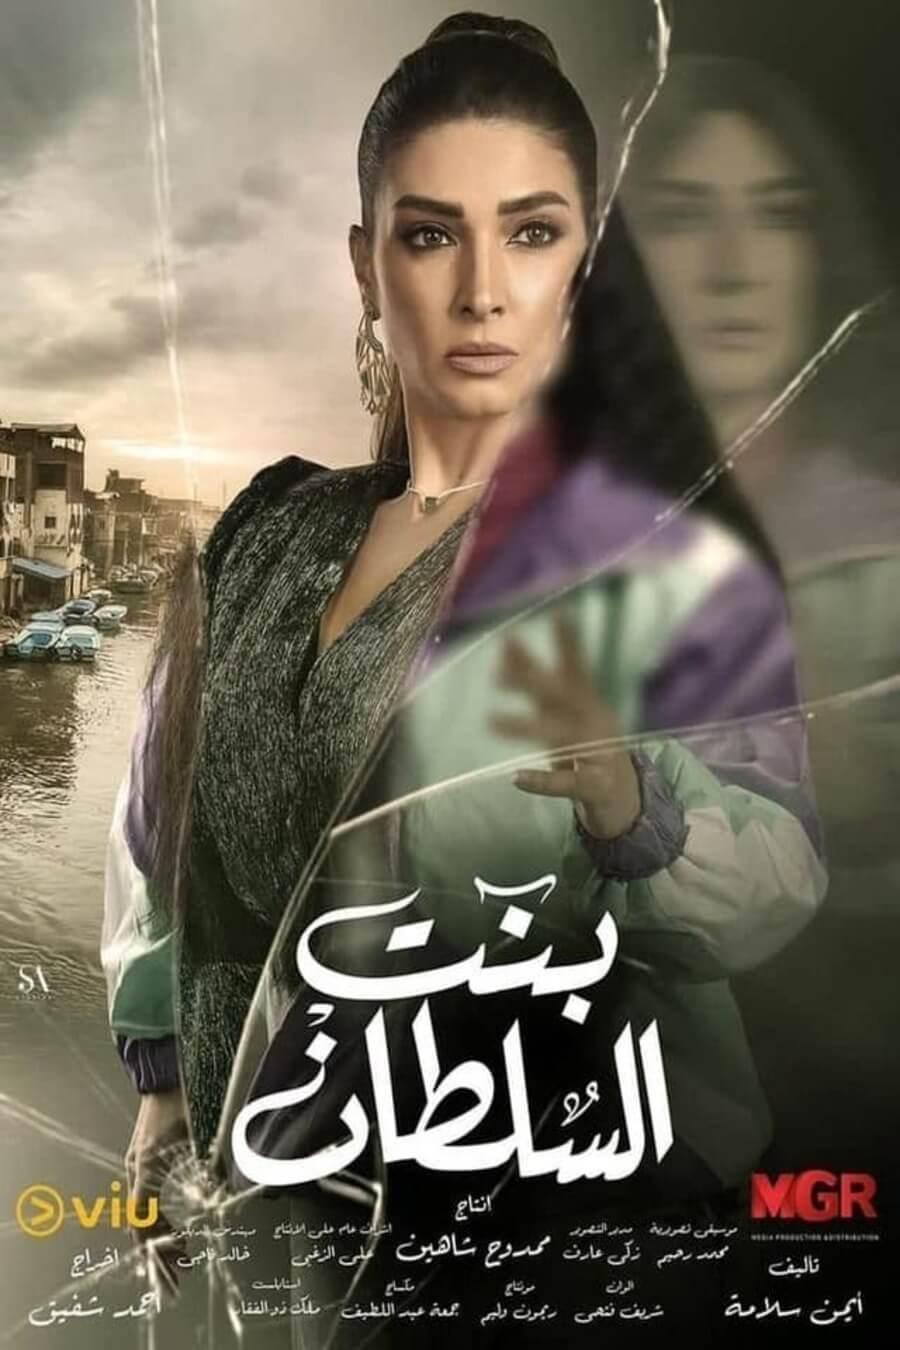 TV ratings for Bint El Sultan (بنت السلطان) in South Korea. viu TV series